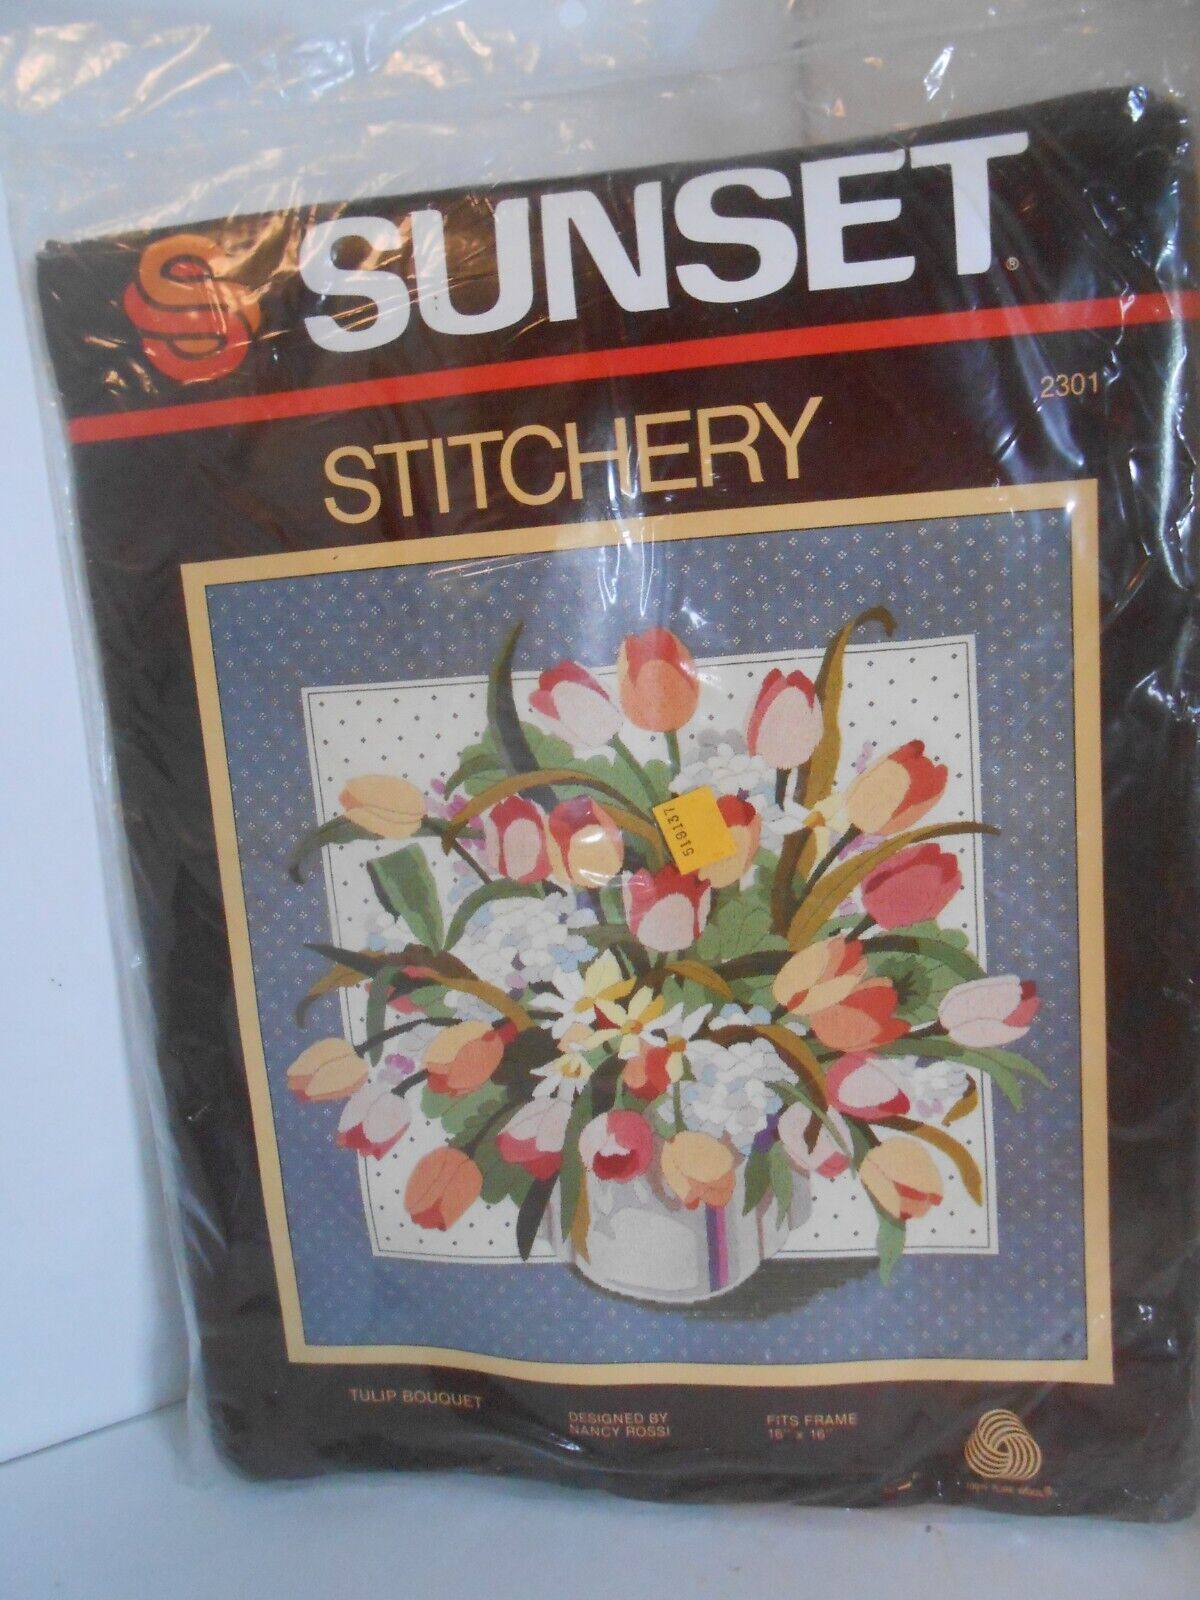 Sunset 1985 Tulip Bouquet 16 x 16 Crewel Embroidery Kit #2301 - $11.30